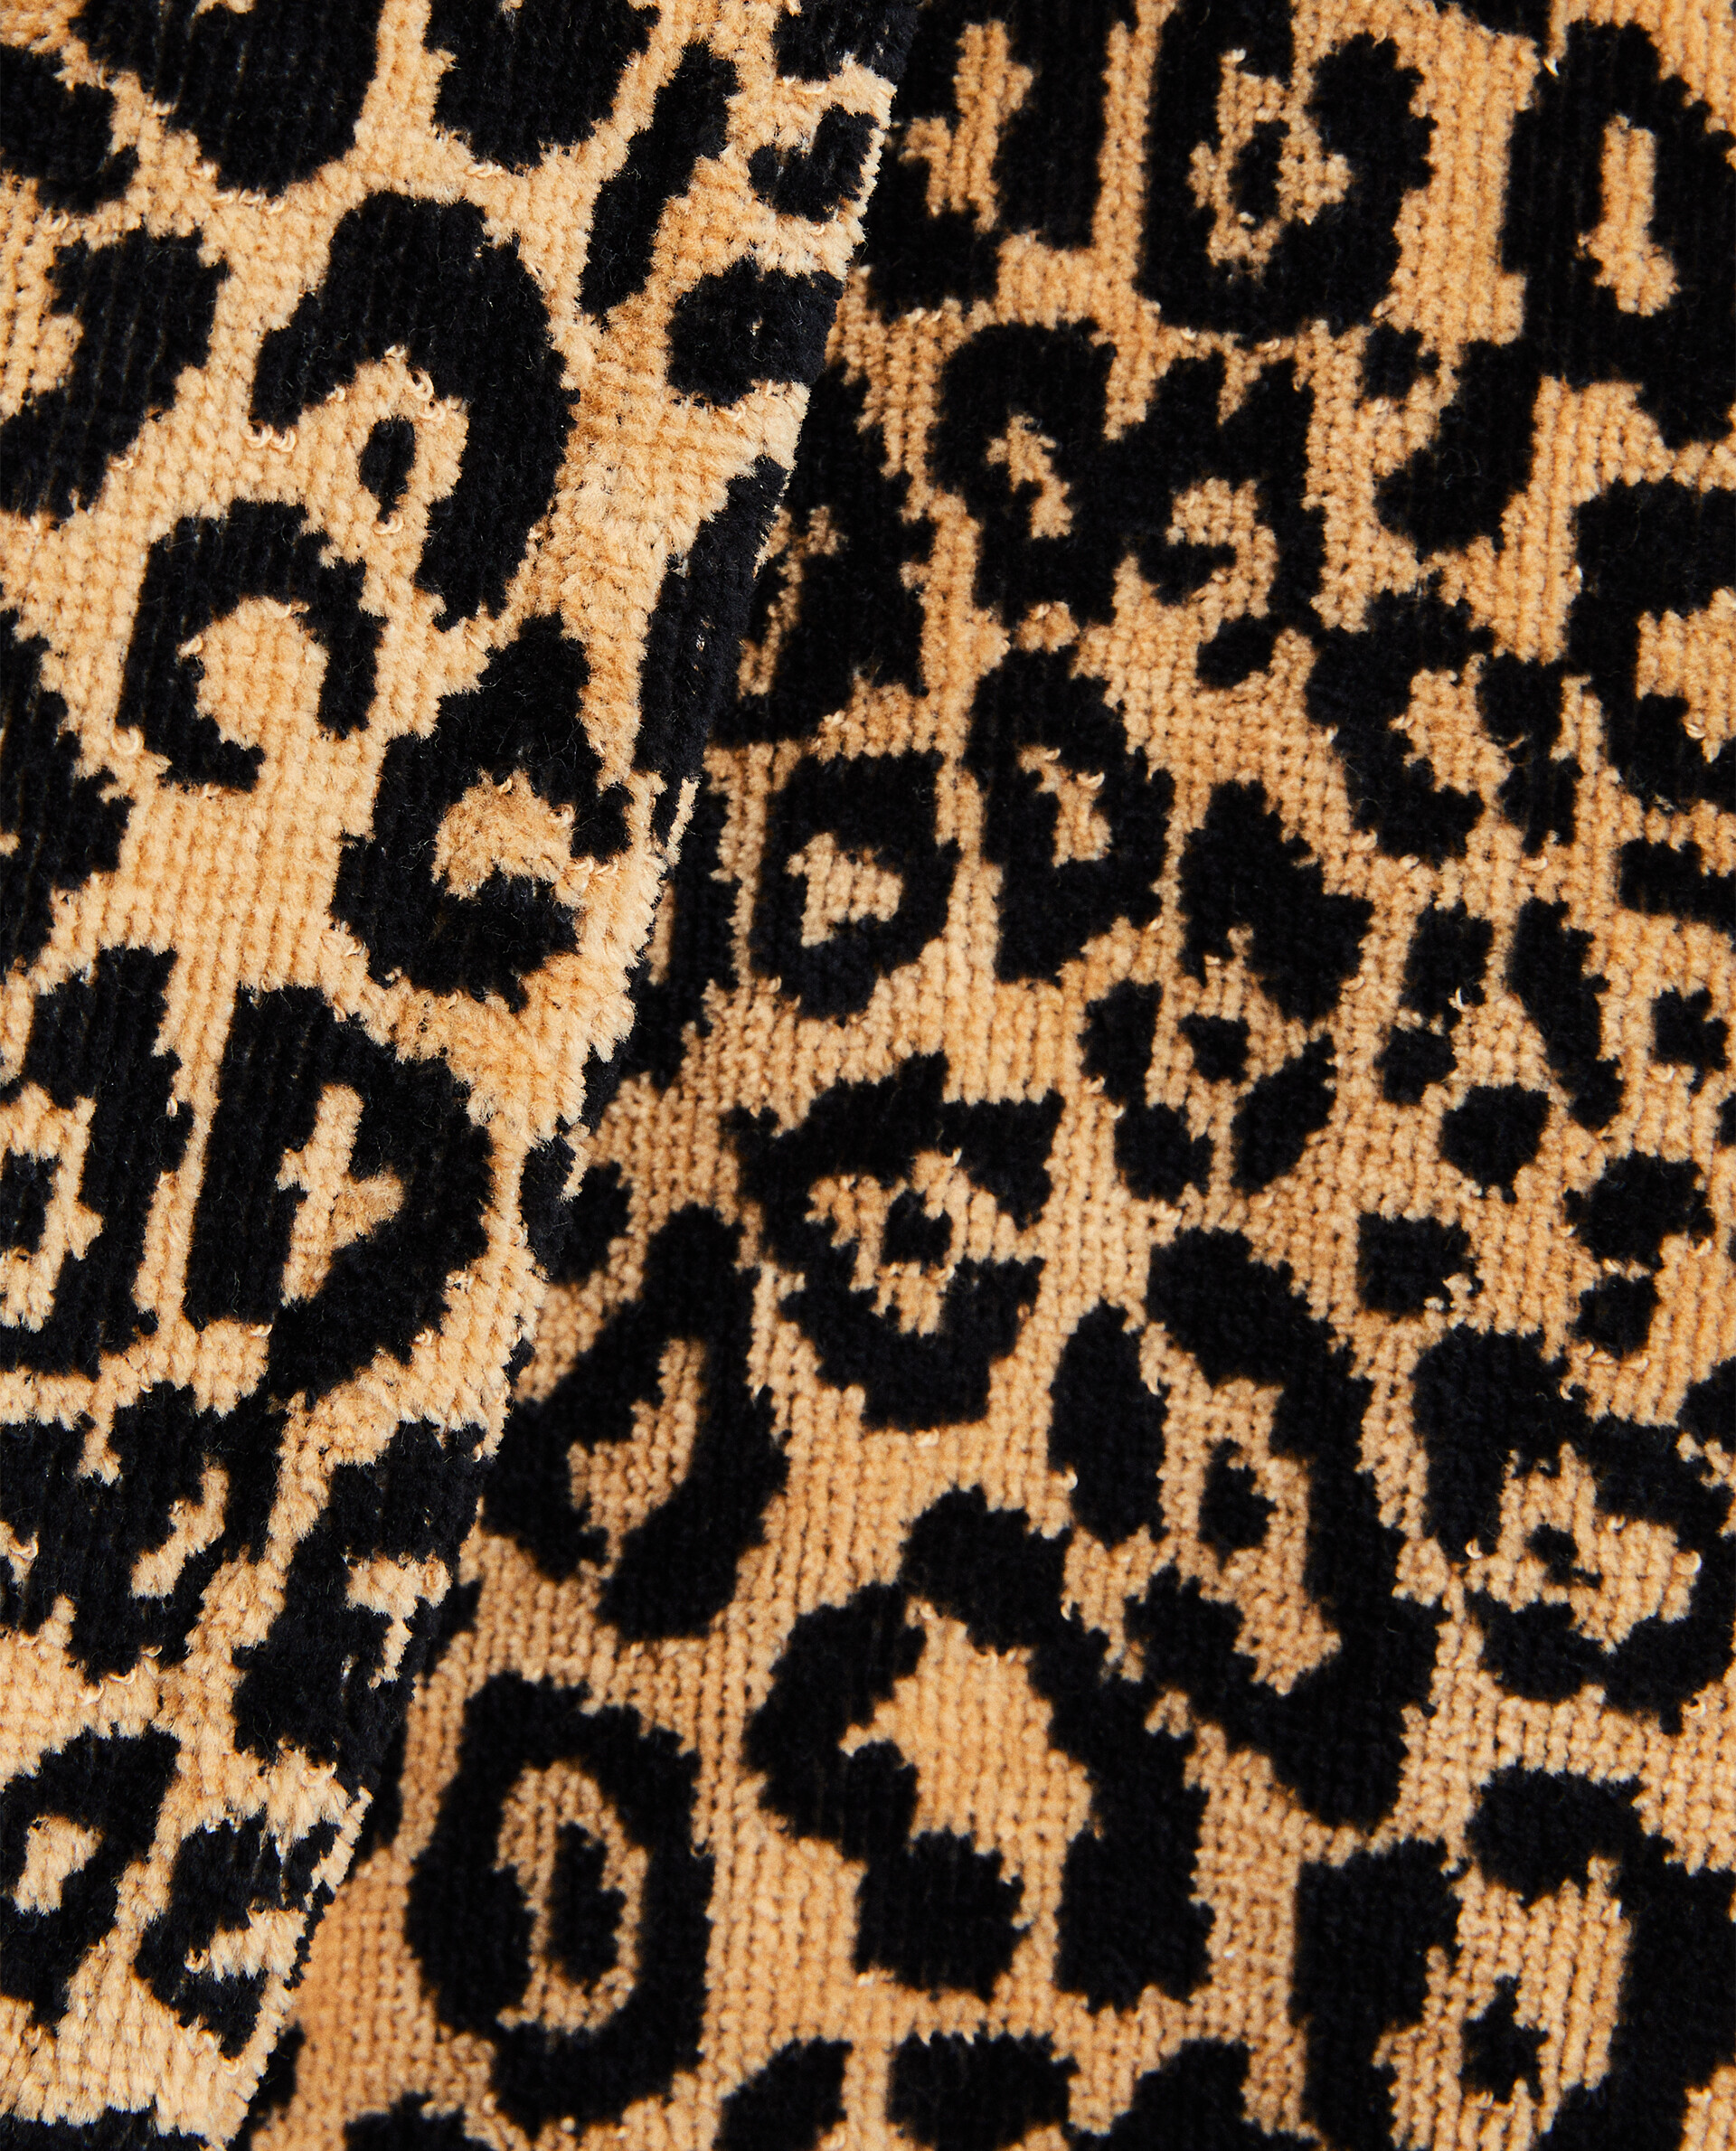 LEOPARD JACQUARD BATHROBE - Leopard